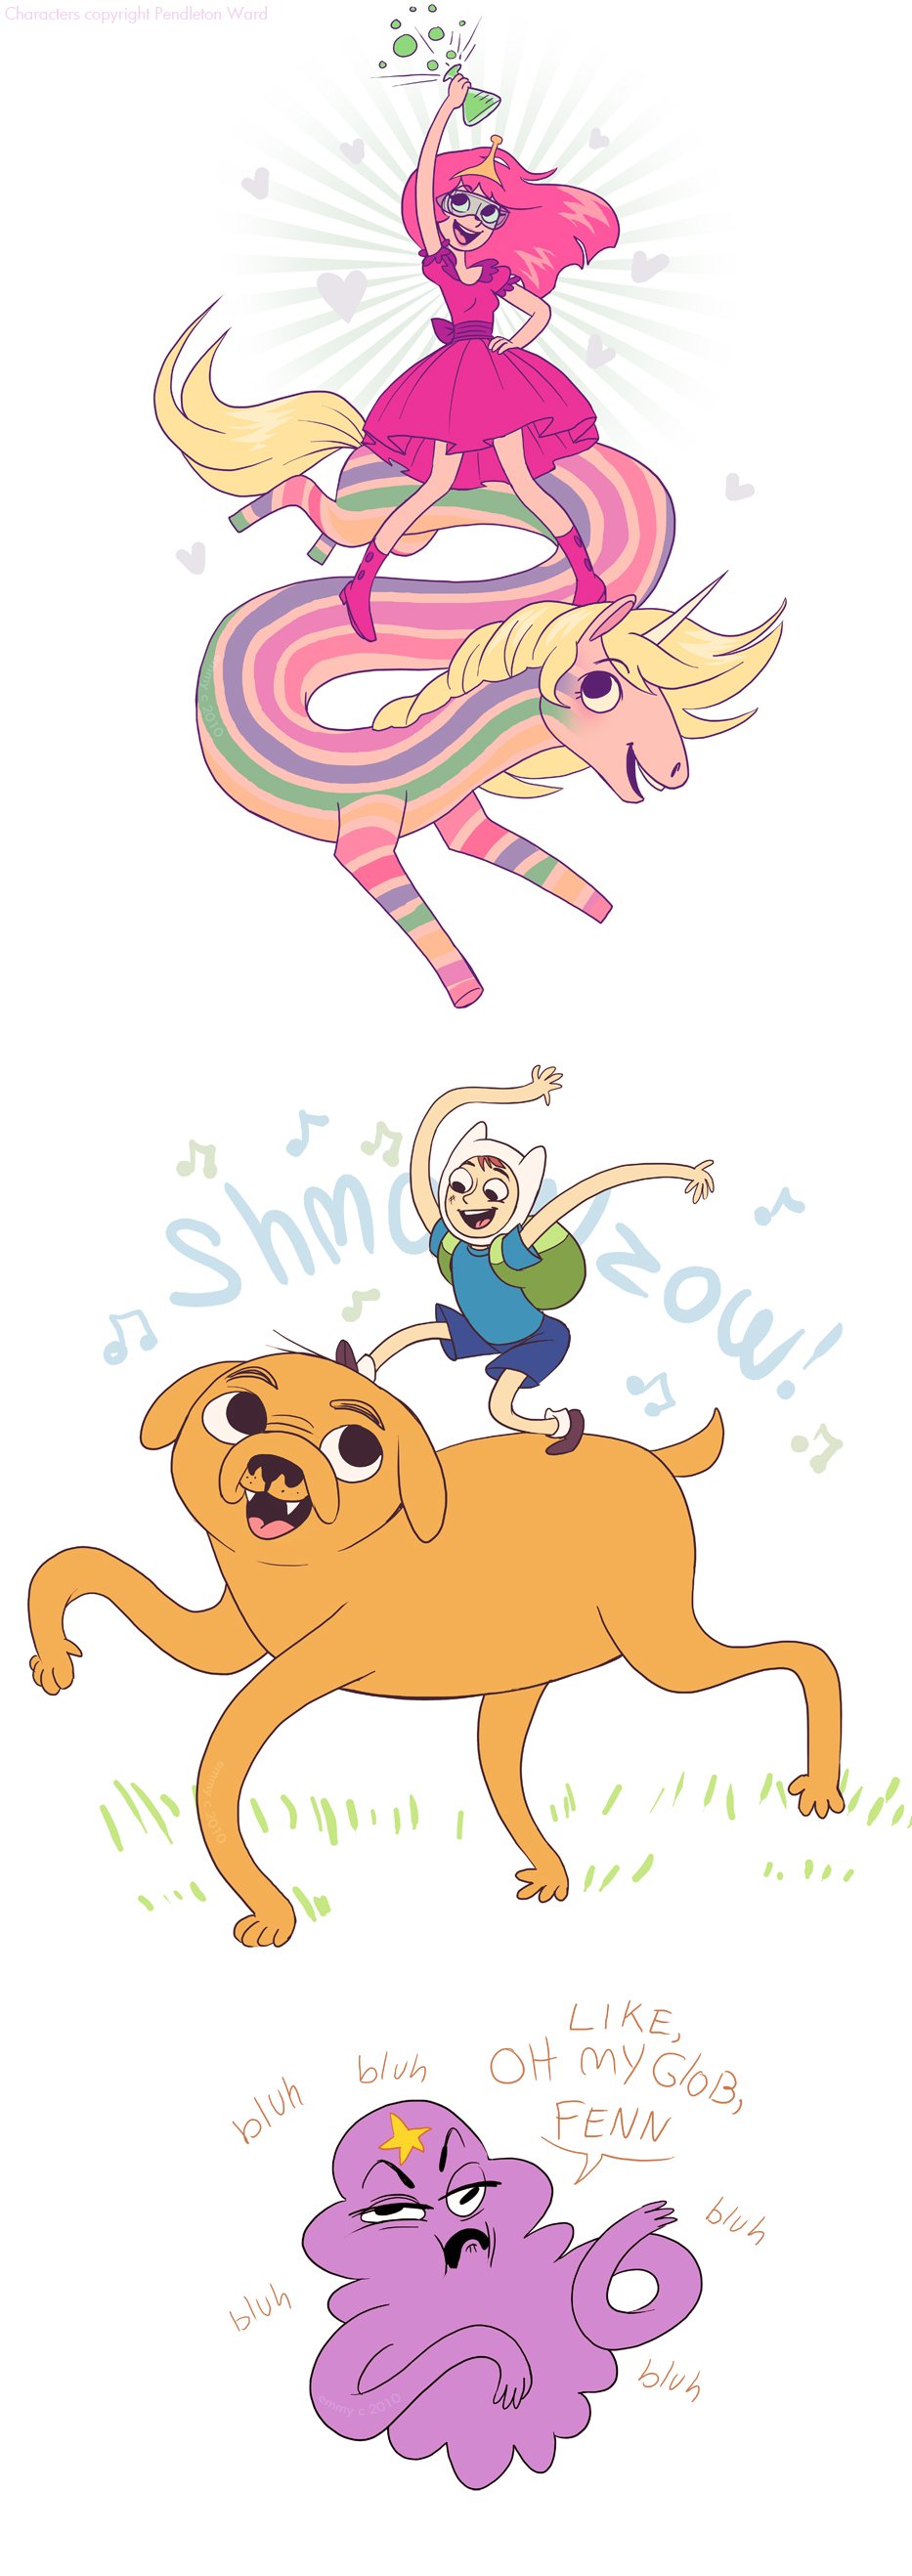 Princess Bubblegum, Lady Rainicorn, Finn the Human, Jake the Dog, Lumpy Space Princess, Cartoon, Adventure Time Wallpaper